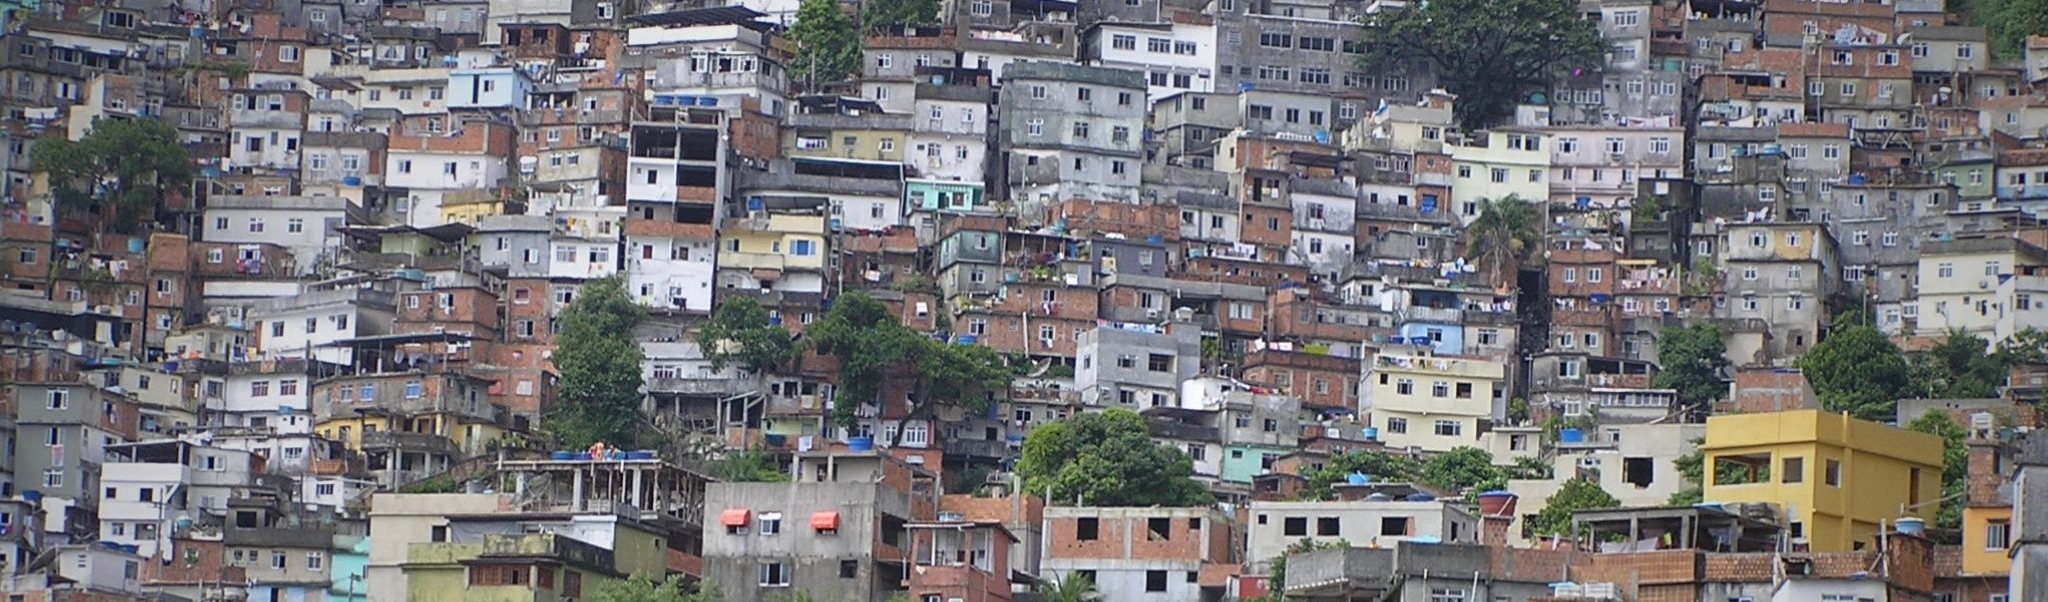 Coronacrise é uma oportunidade de redesenhar rumo histórico das cidades brasileiras